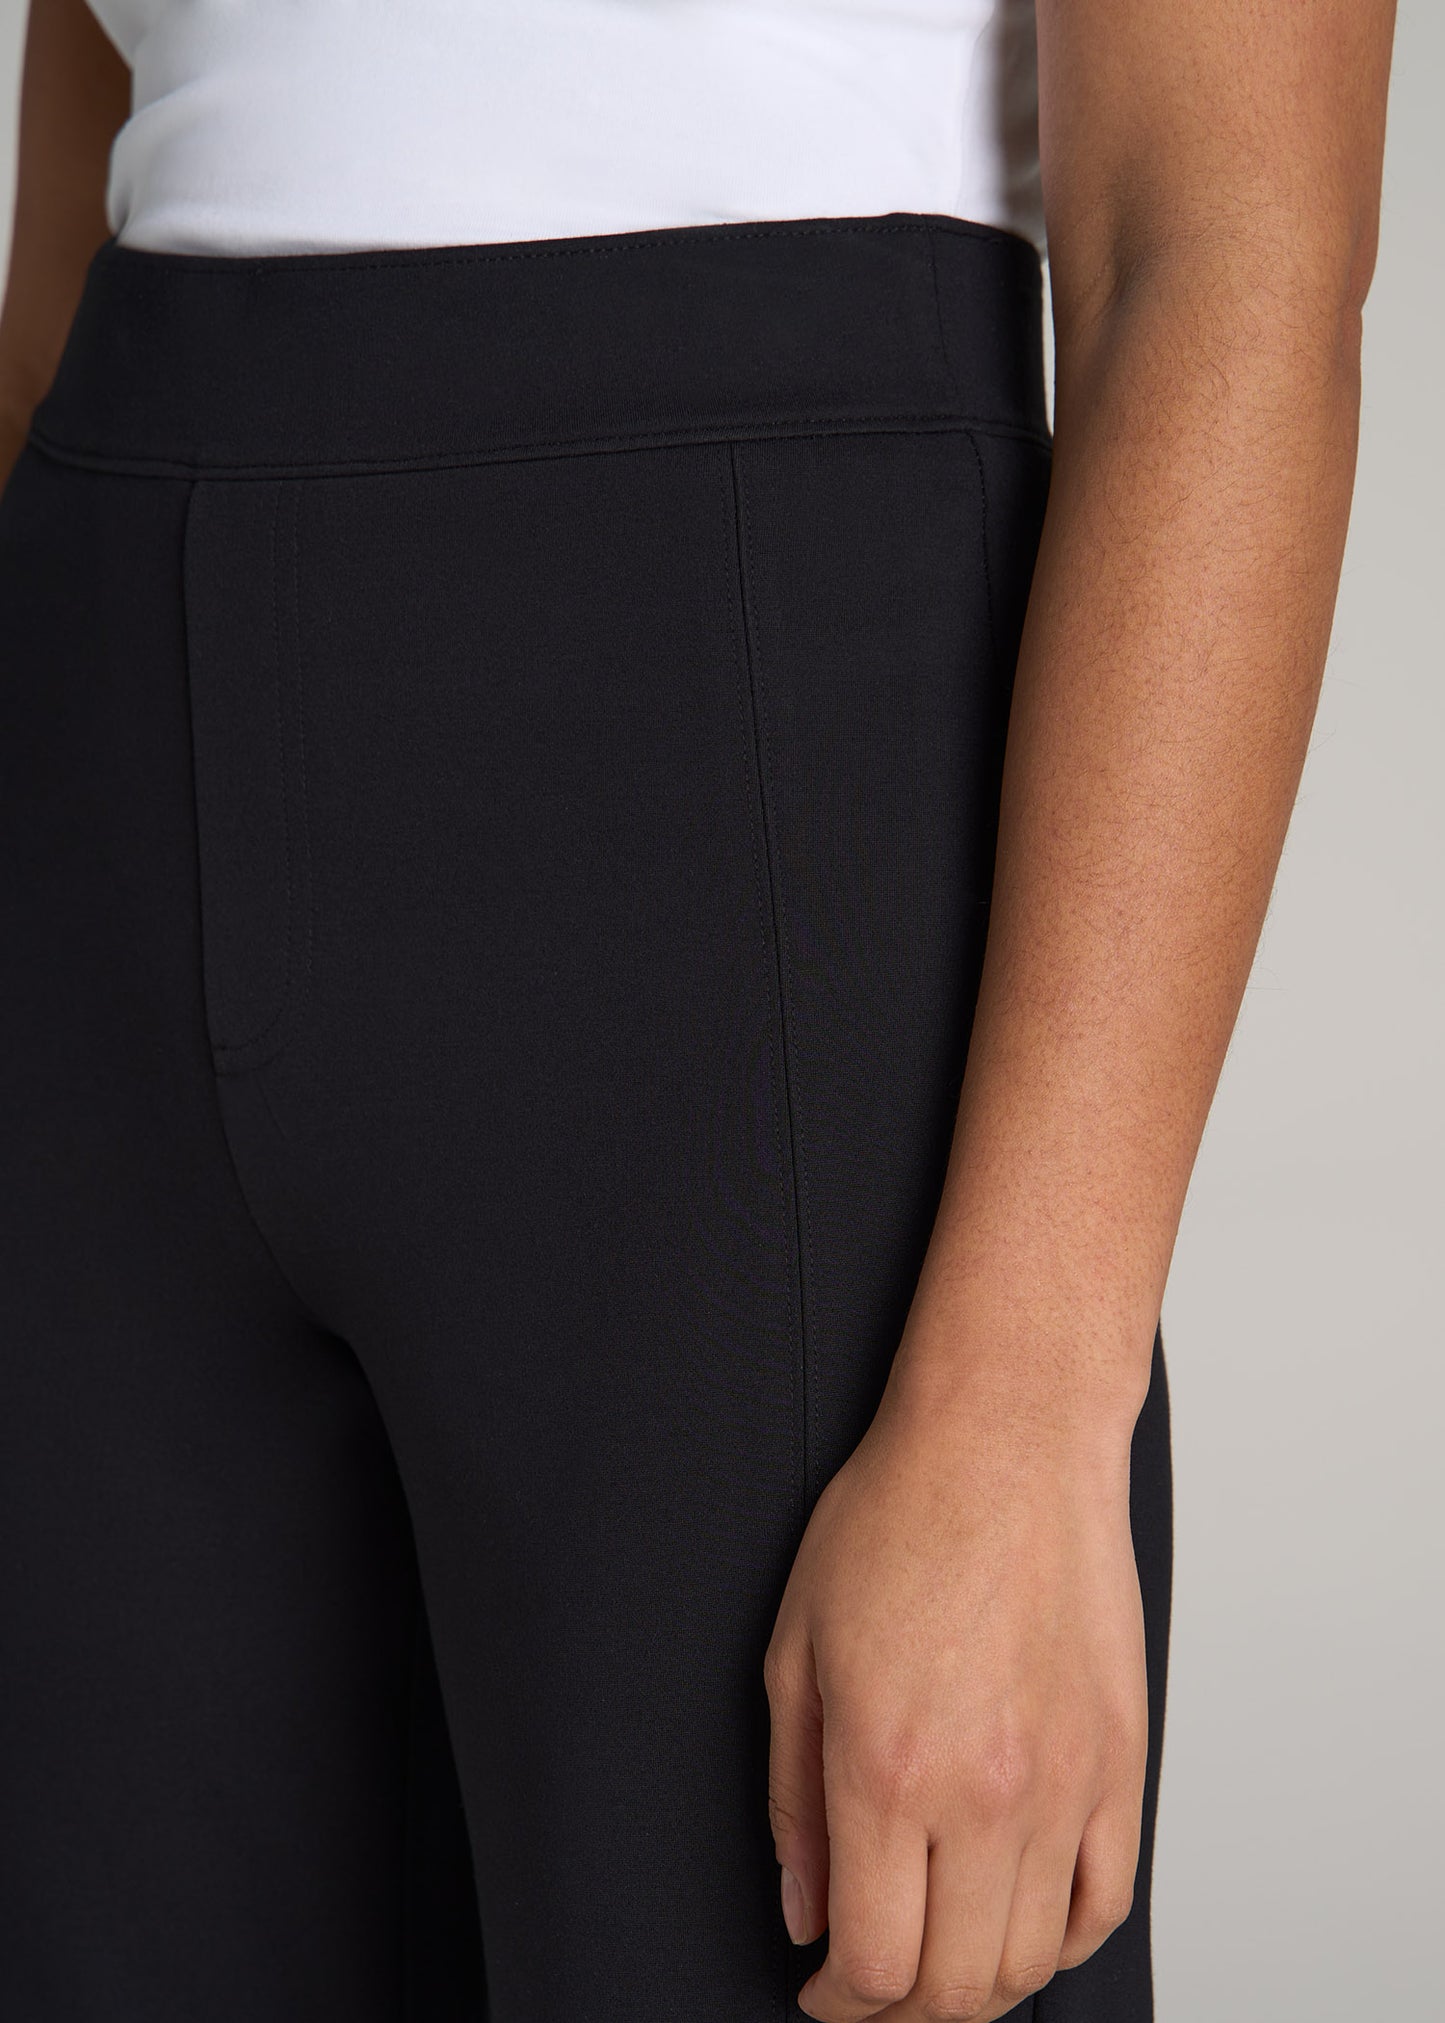 Pull-on Slim Dress Pants for Tall Women in Black